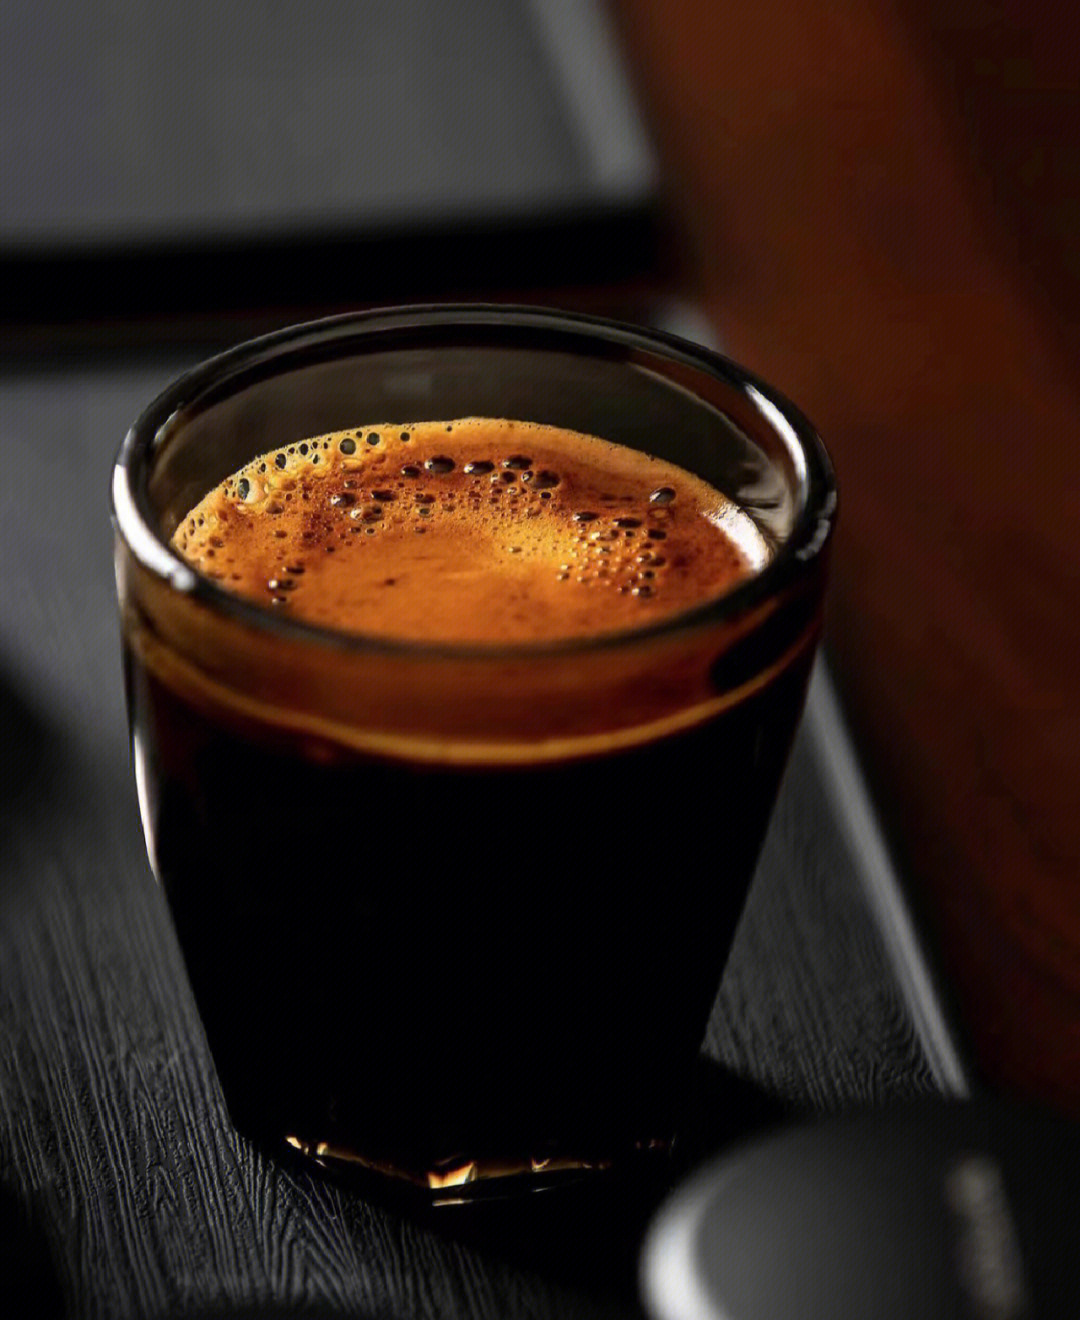 espresso浓缩咖啡应该怎么喝?